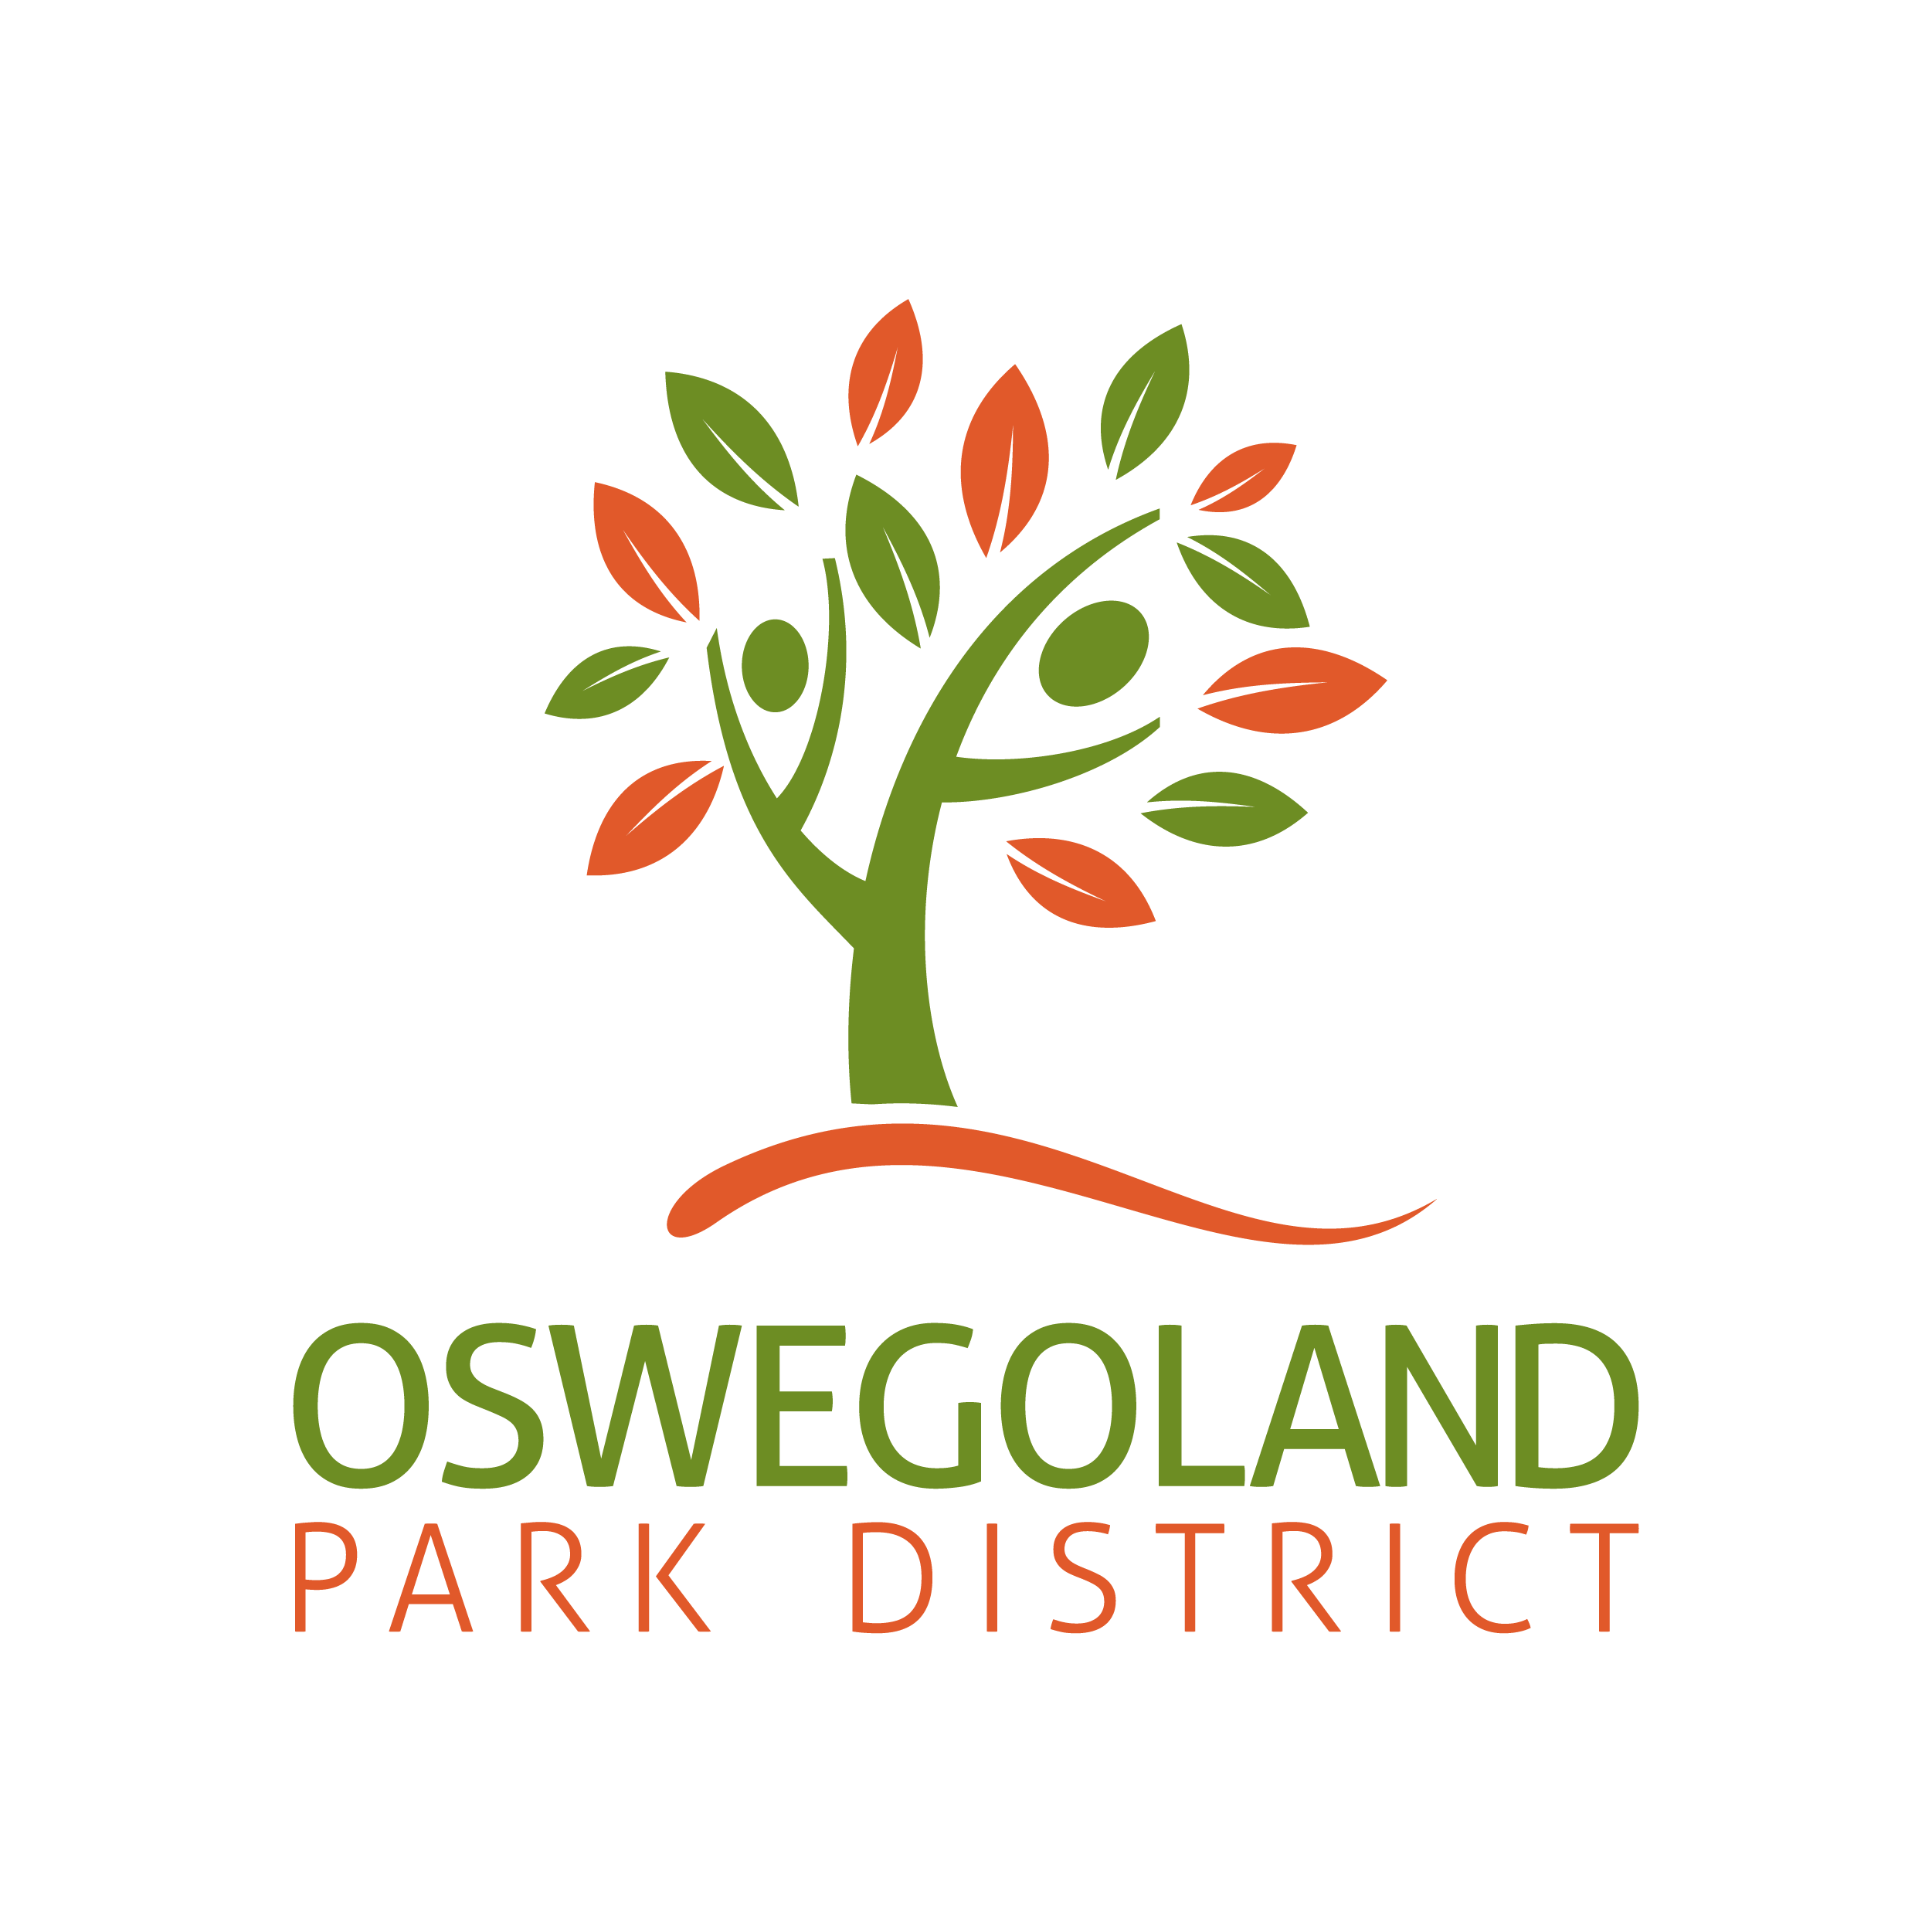 Oswegoland Park District